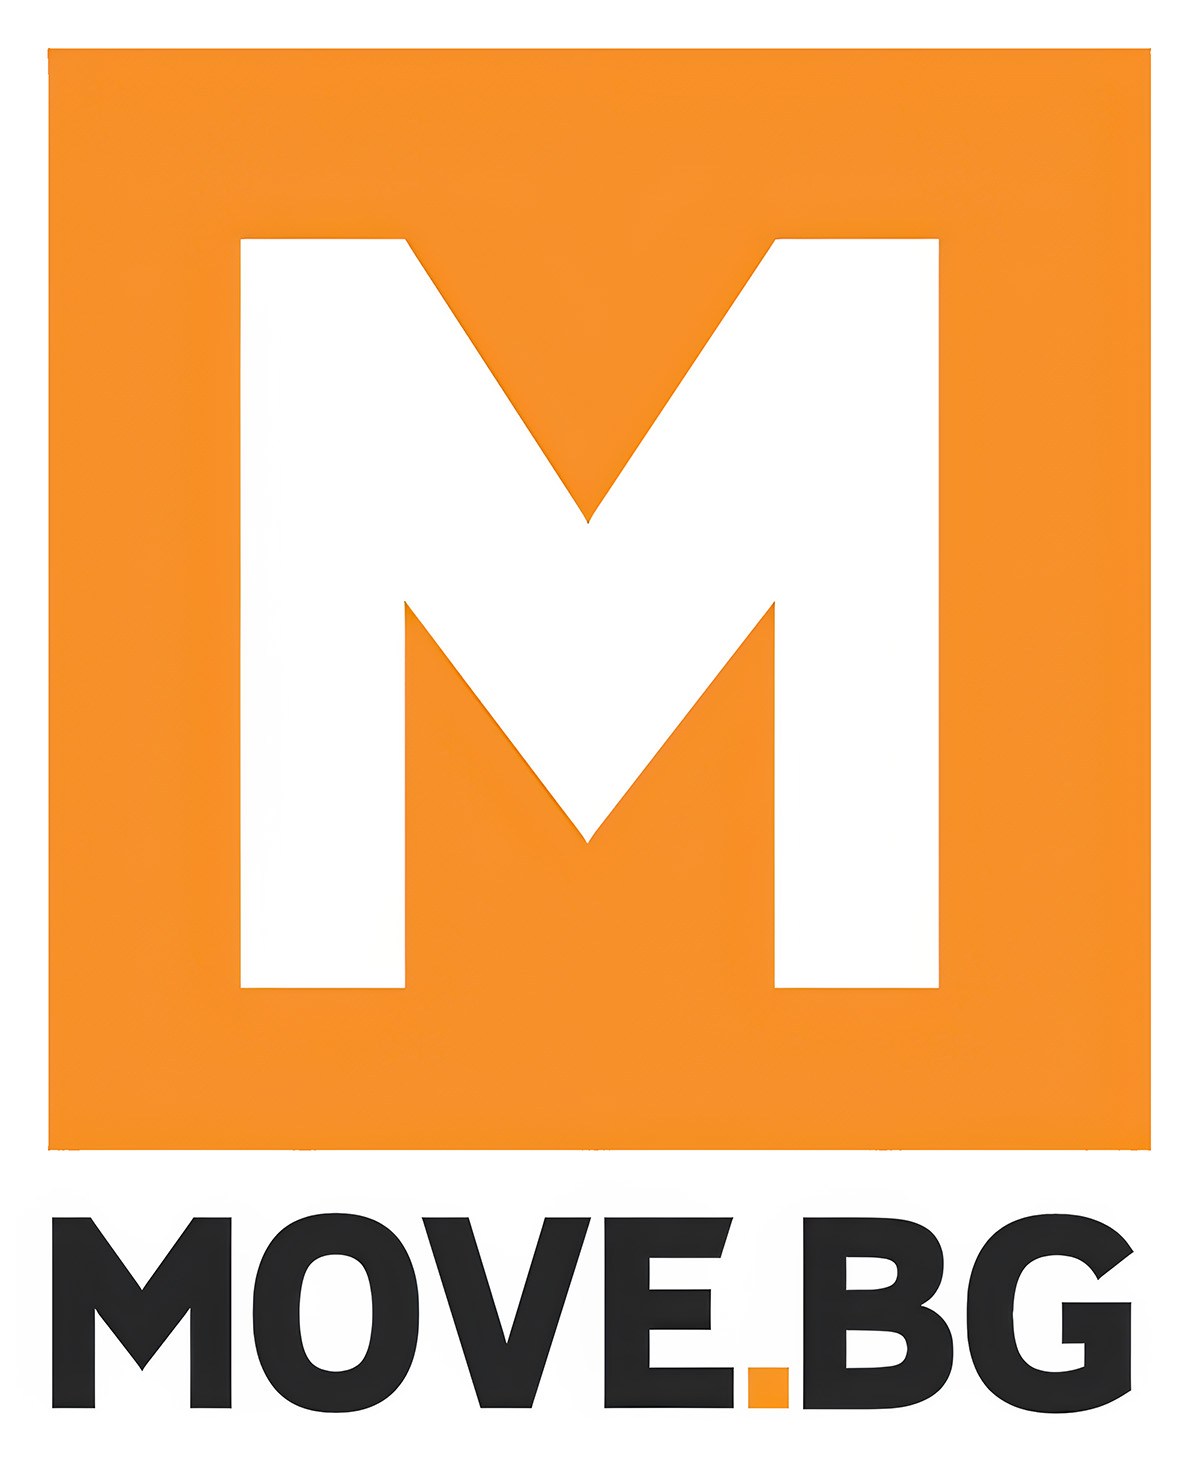 MOVE.BG